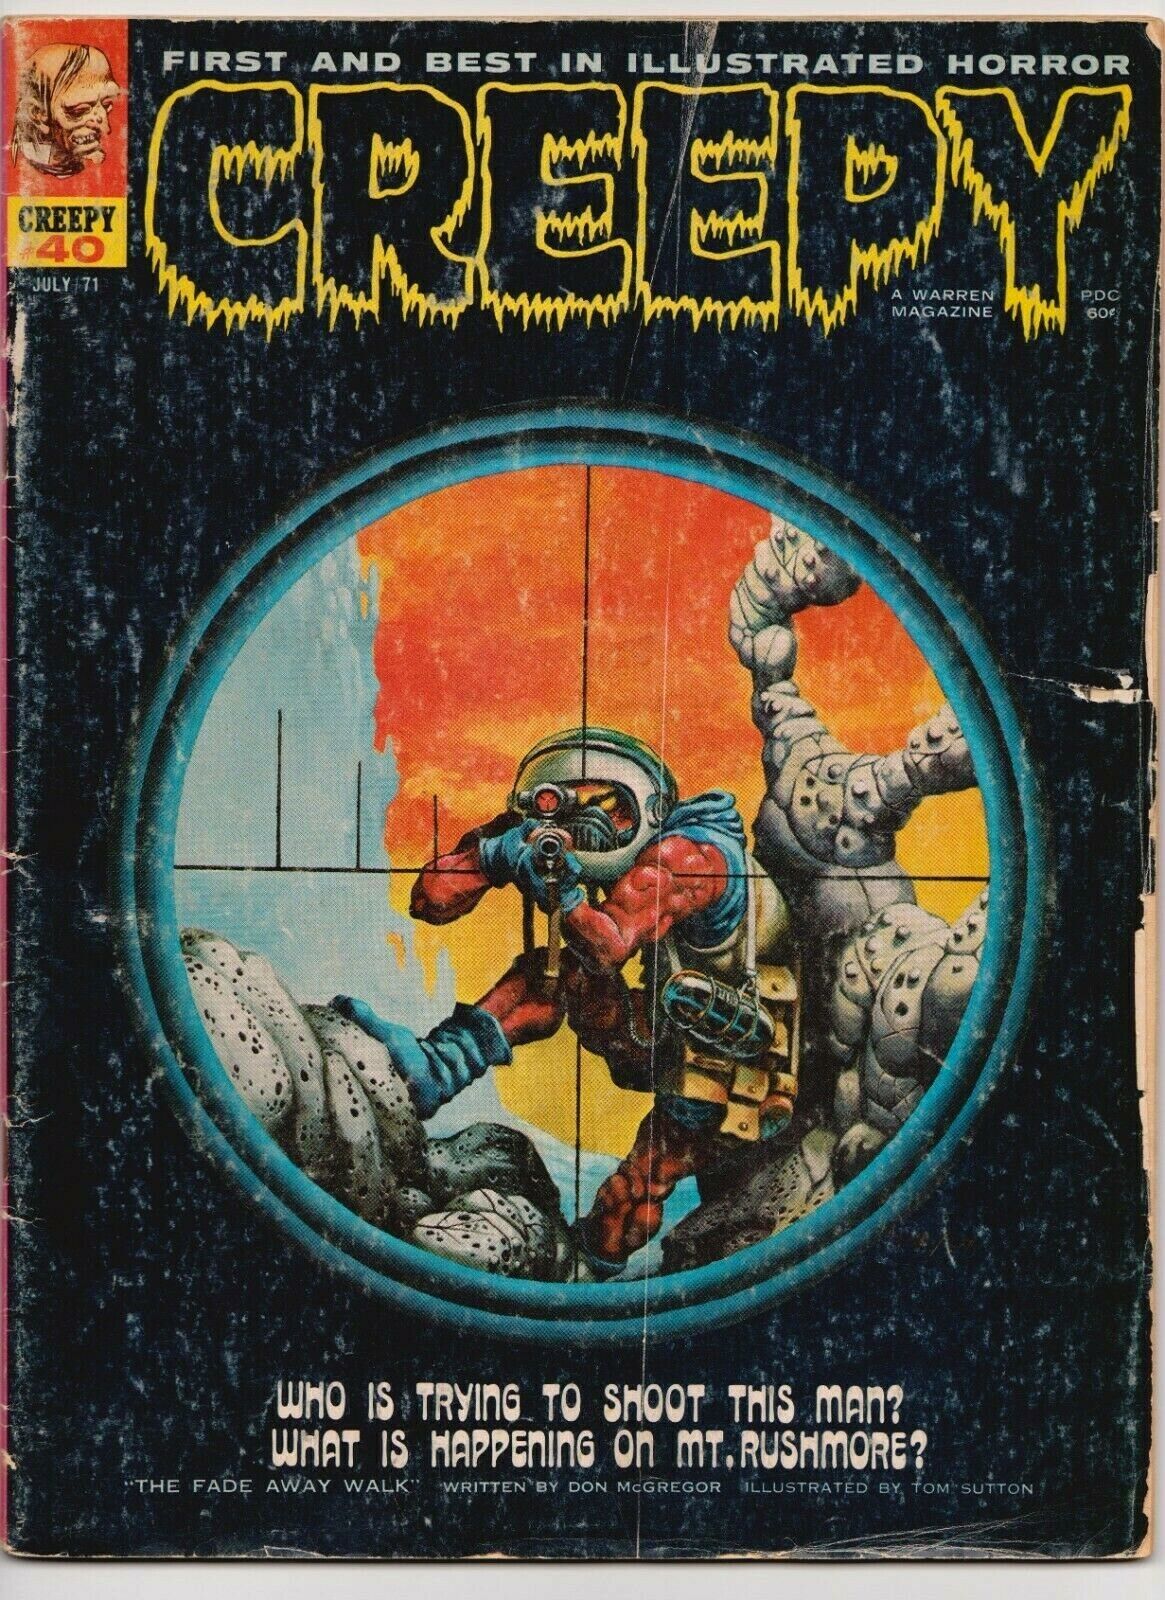 Creepy Magazine No. 40 July 1971 Illustrated Horror A Warren Magazine